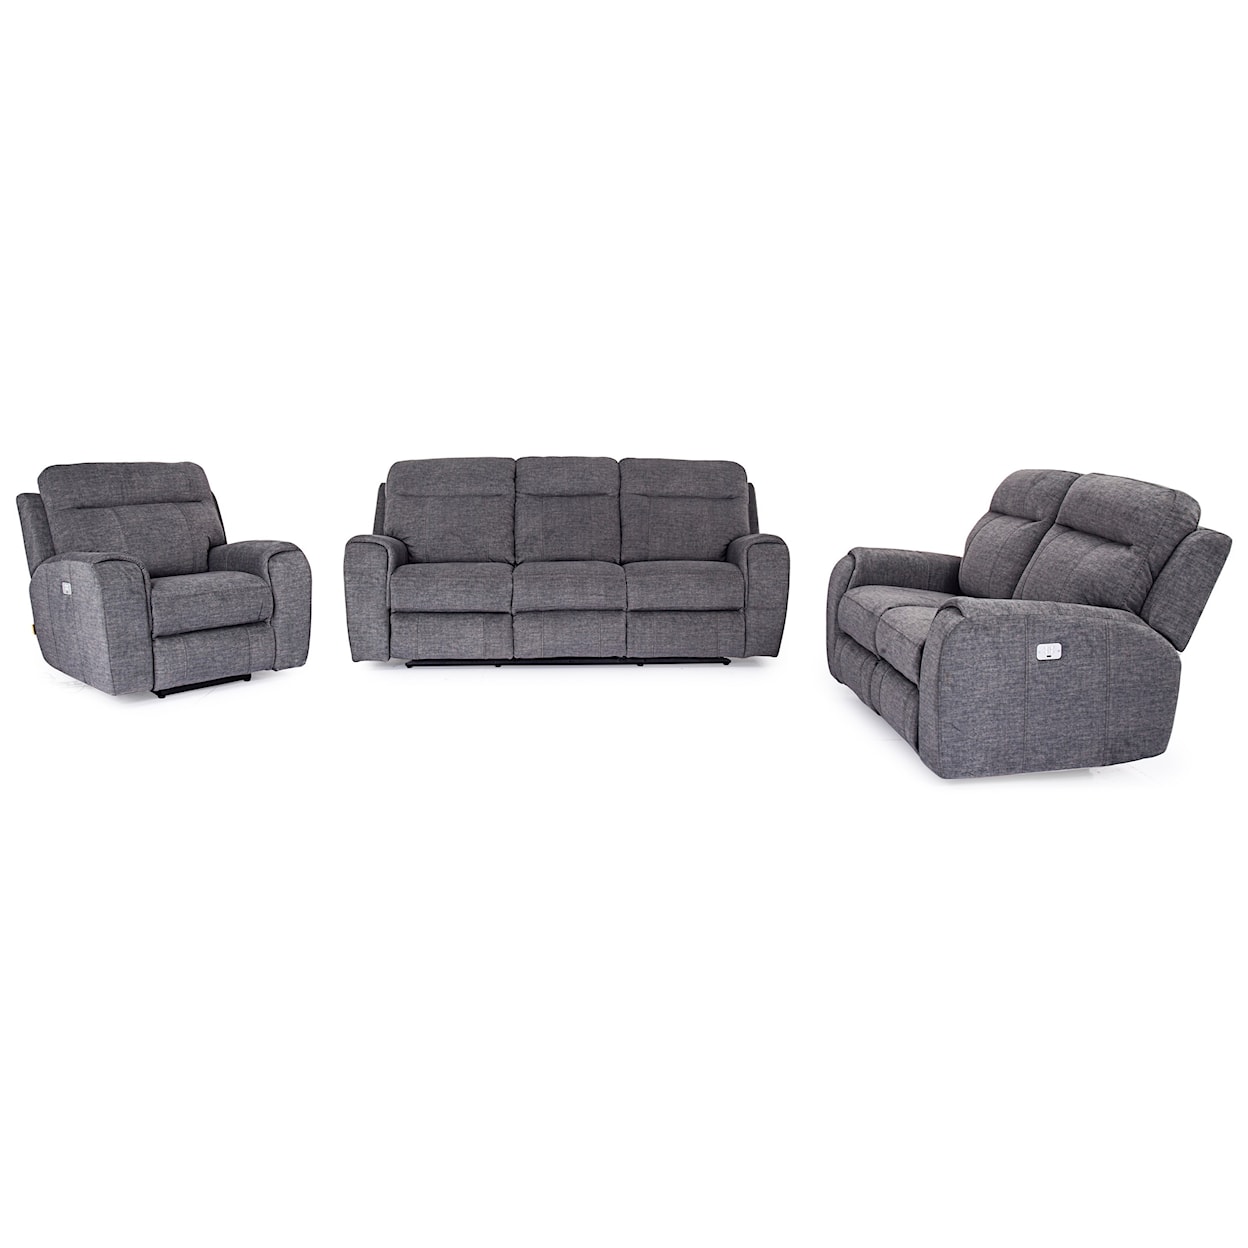 Warehouse M 9868 Reclining Sofa w/ Power Headrests